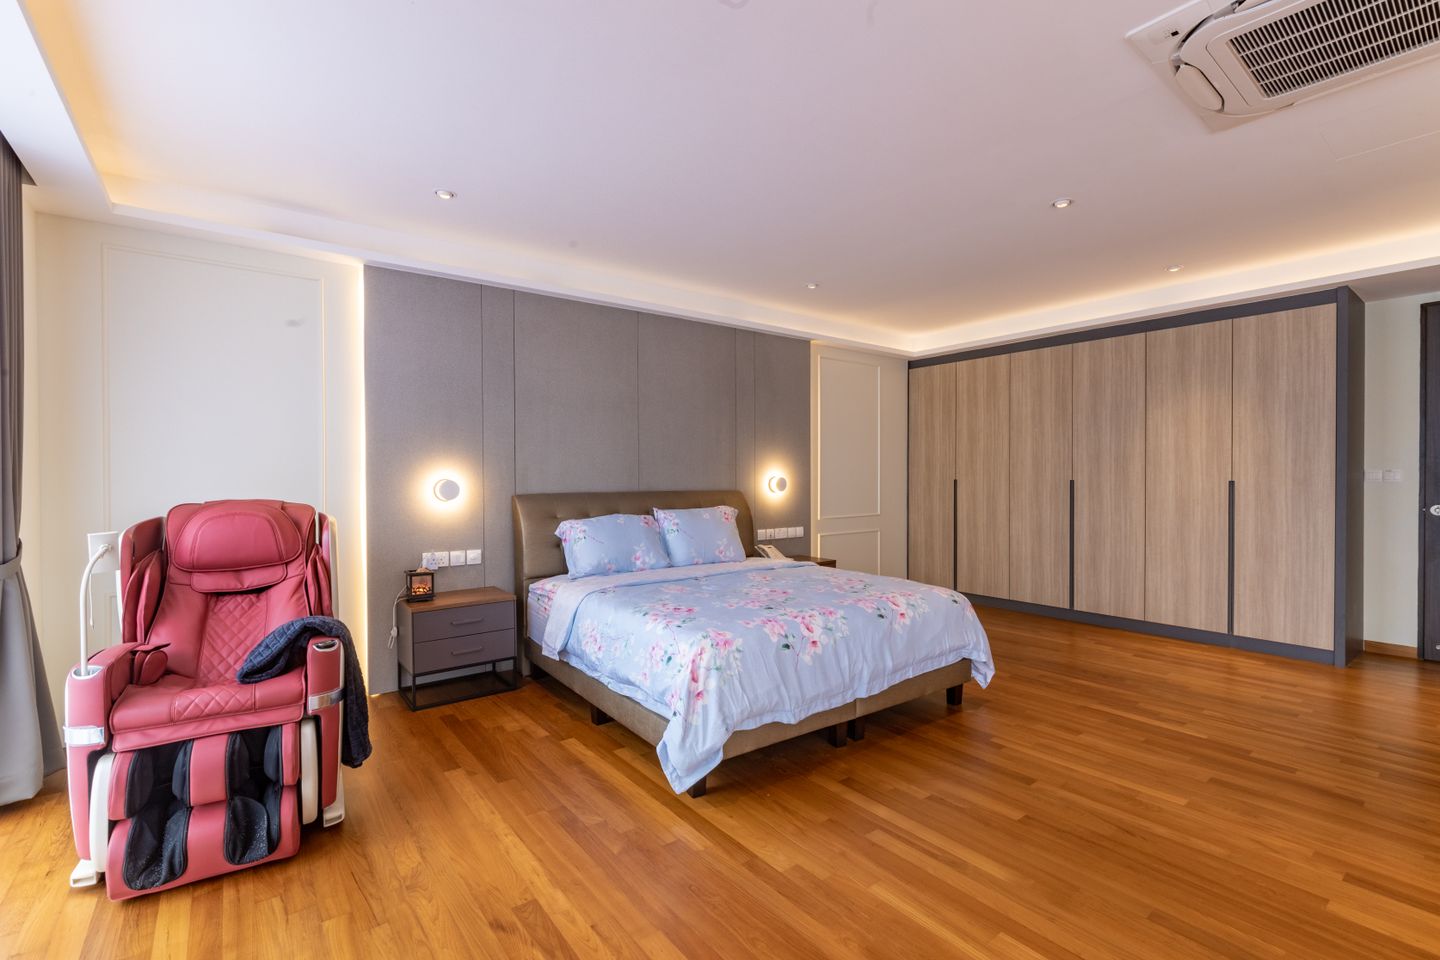 Spacious Contemporary Design For Bedrooms - Livspace